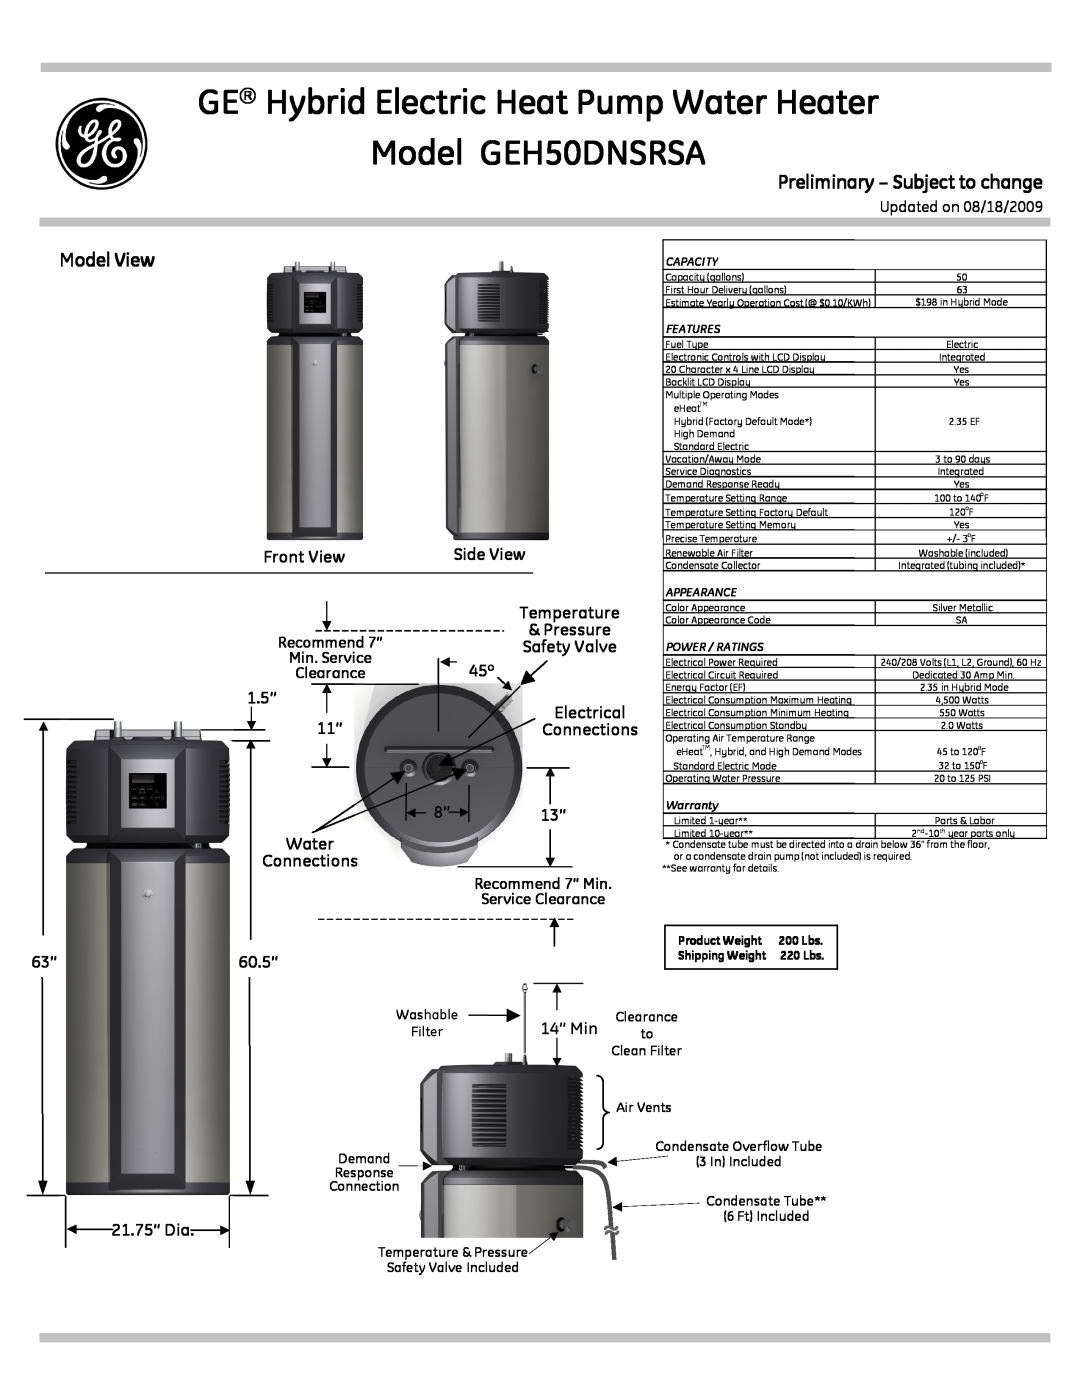 GE warranty GE Hybrid Electric Heat Pump Water Heater Model GEH50DNSRSA, Preliminary - Subject to change, Model View 